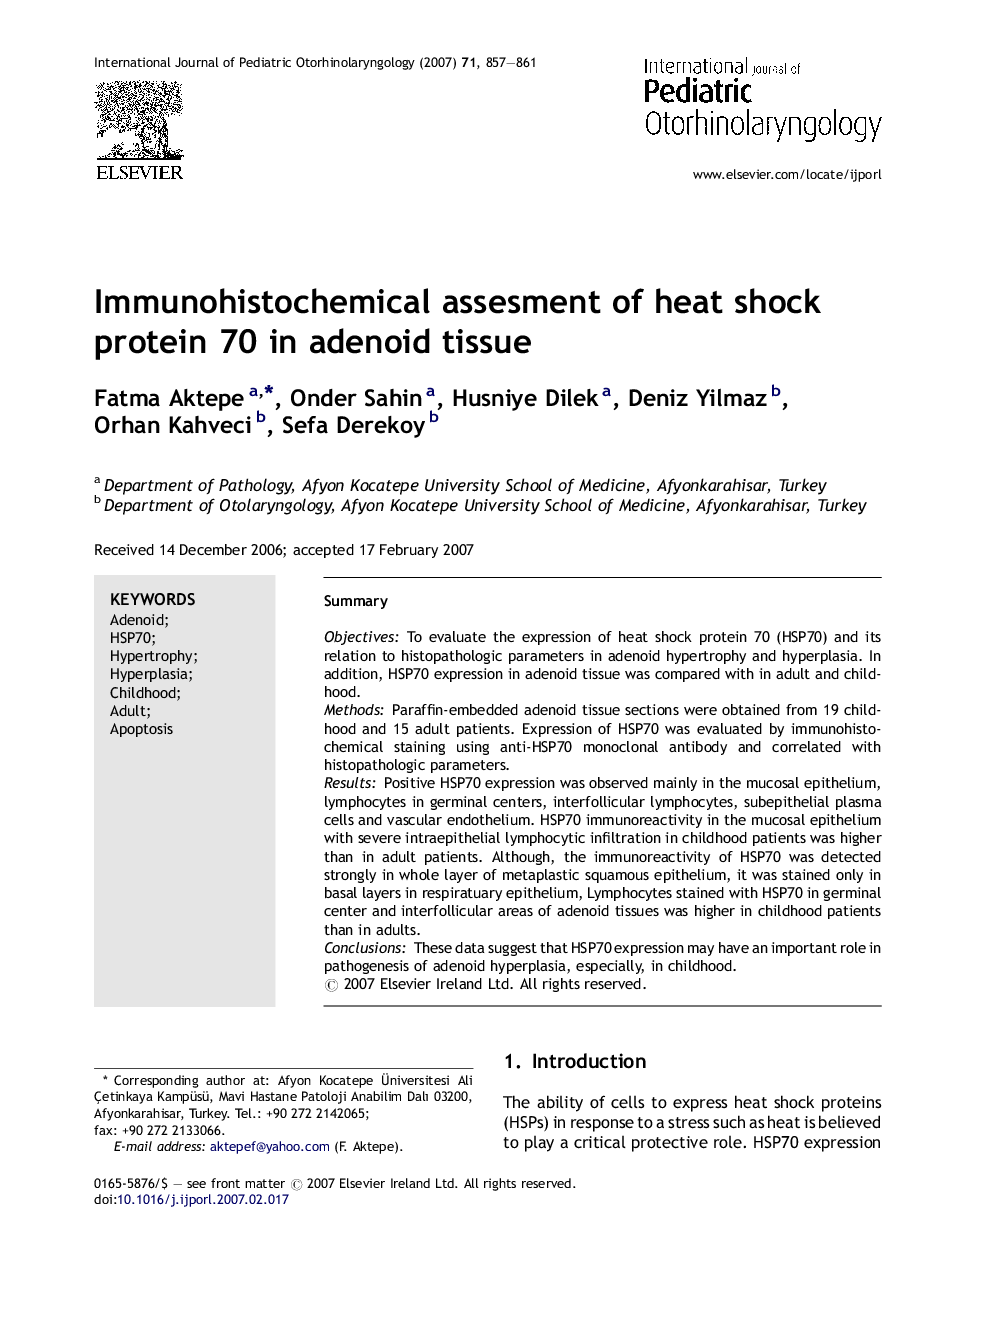 Immunohistochemical assesment of heat shock protein 70 in adenoid tissue